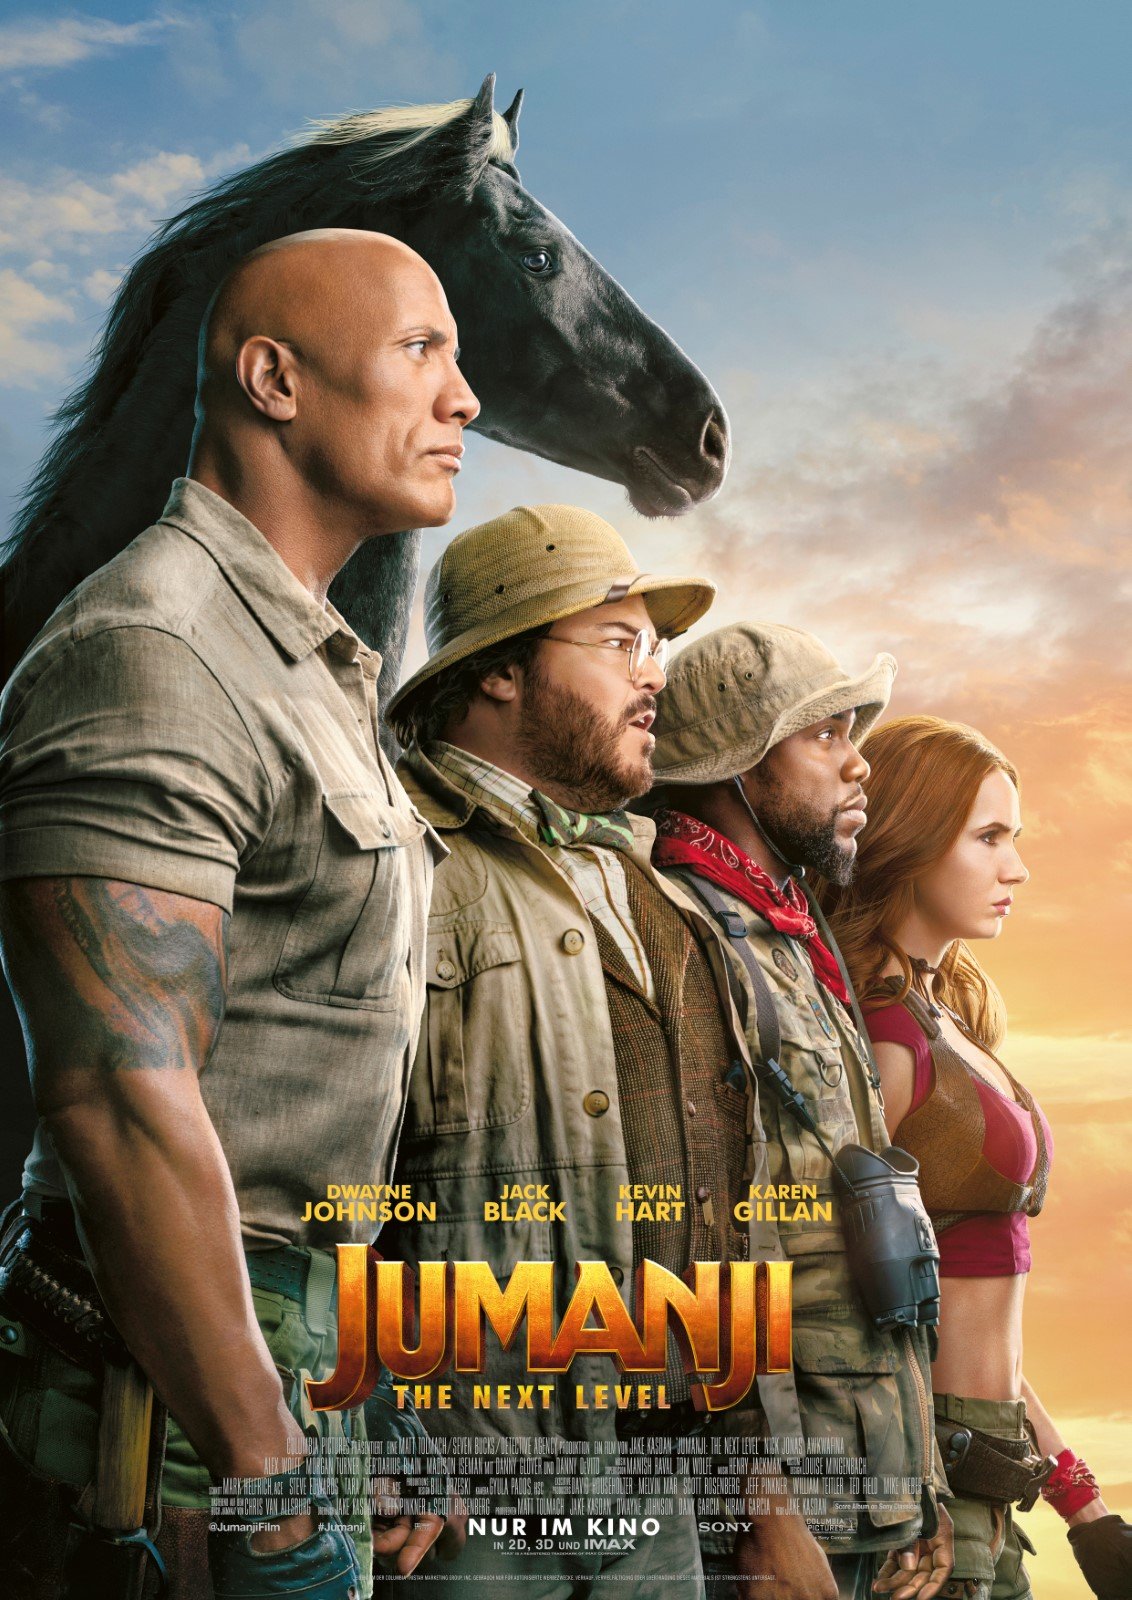 Poster zum Jumanji 2: The Next Level - Bild 1 - FILMSTARTS.de